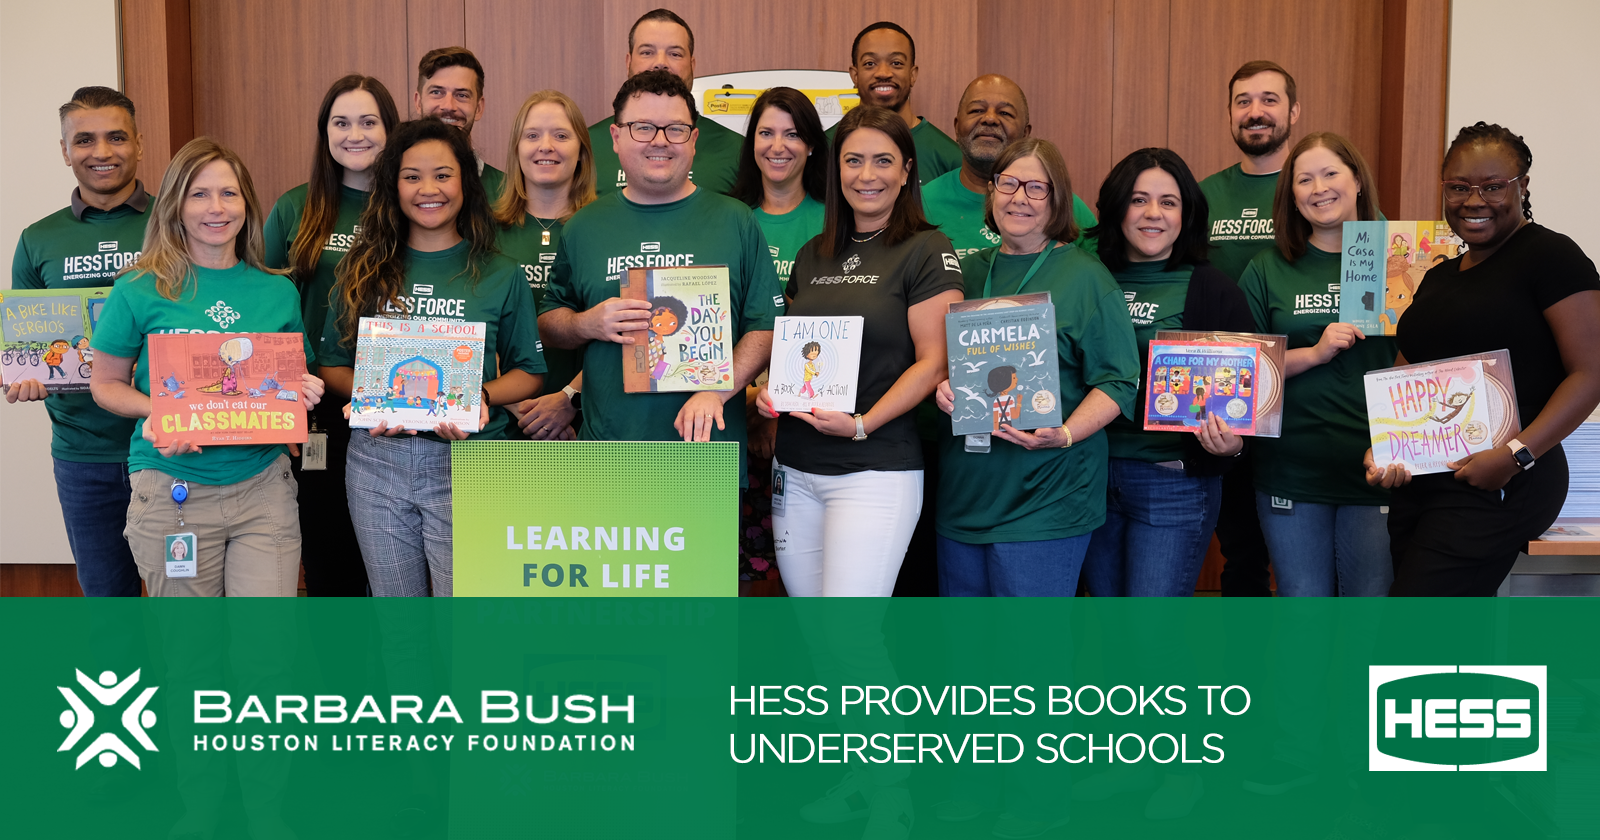 Hess Partners with the Barbara Bush Houston Literacy Foundation